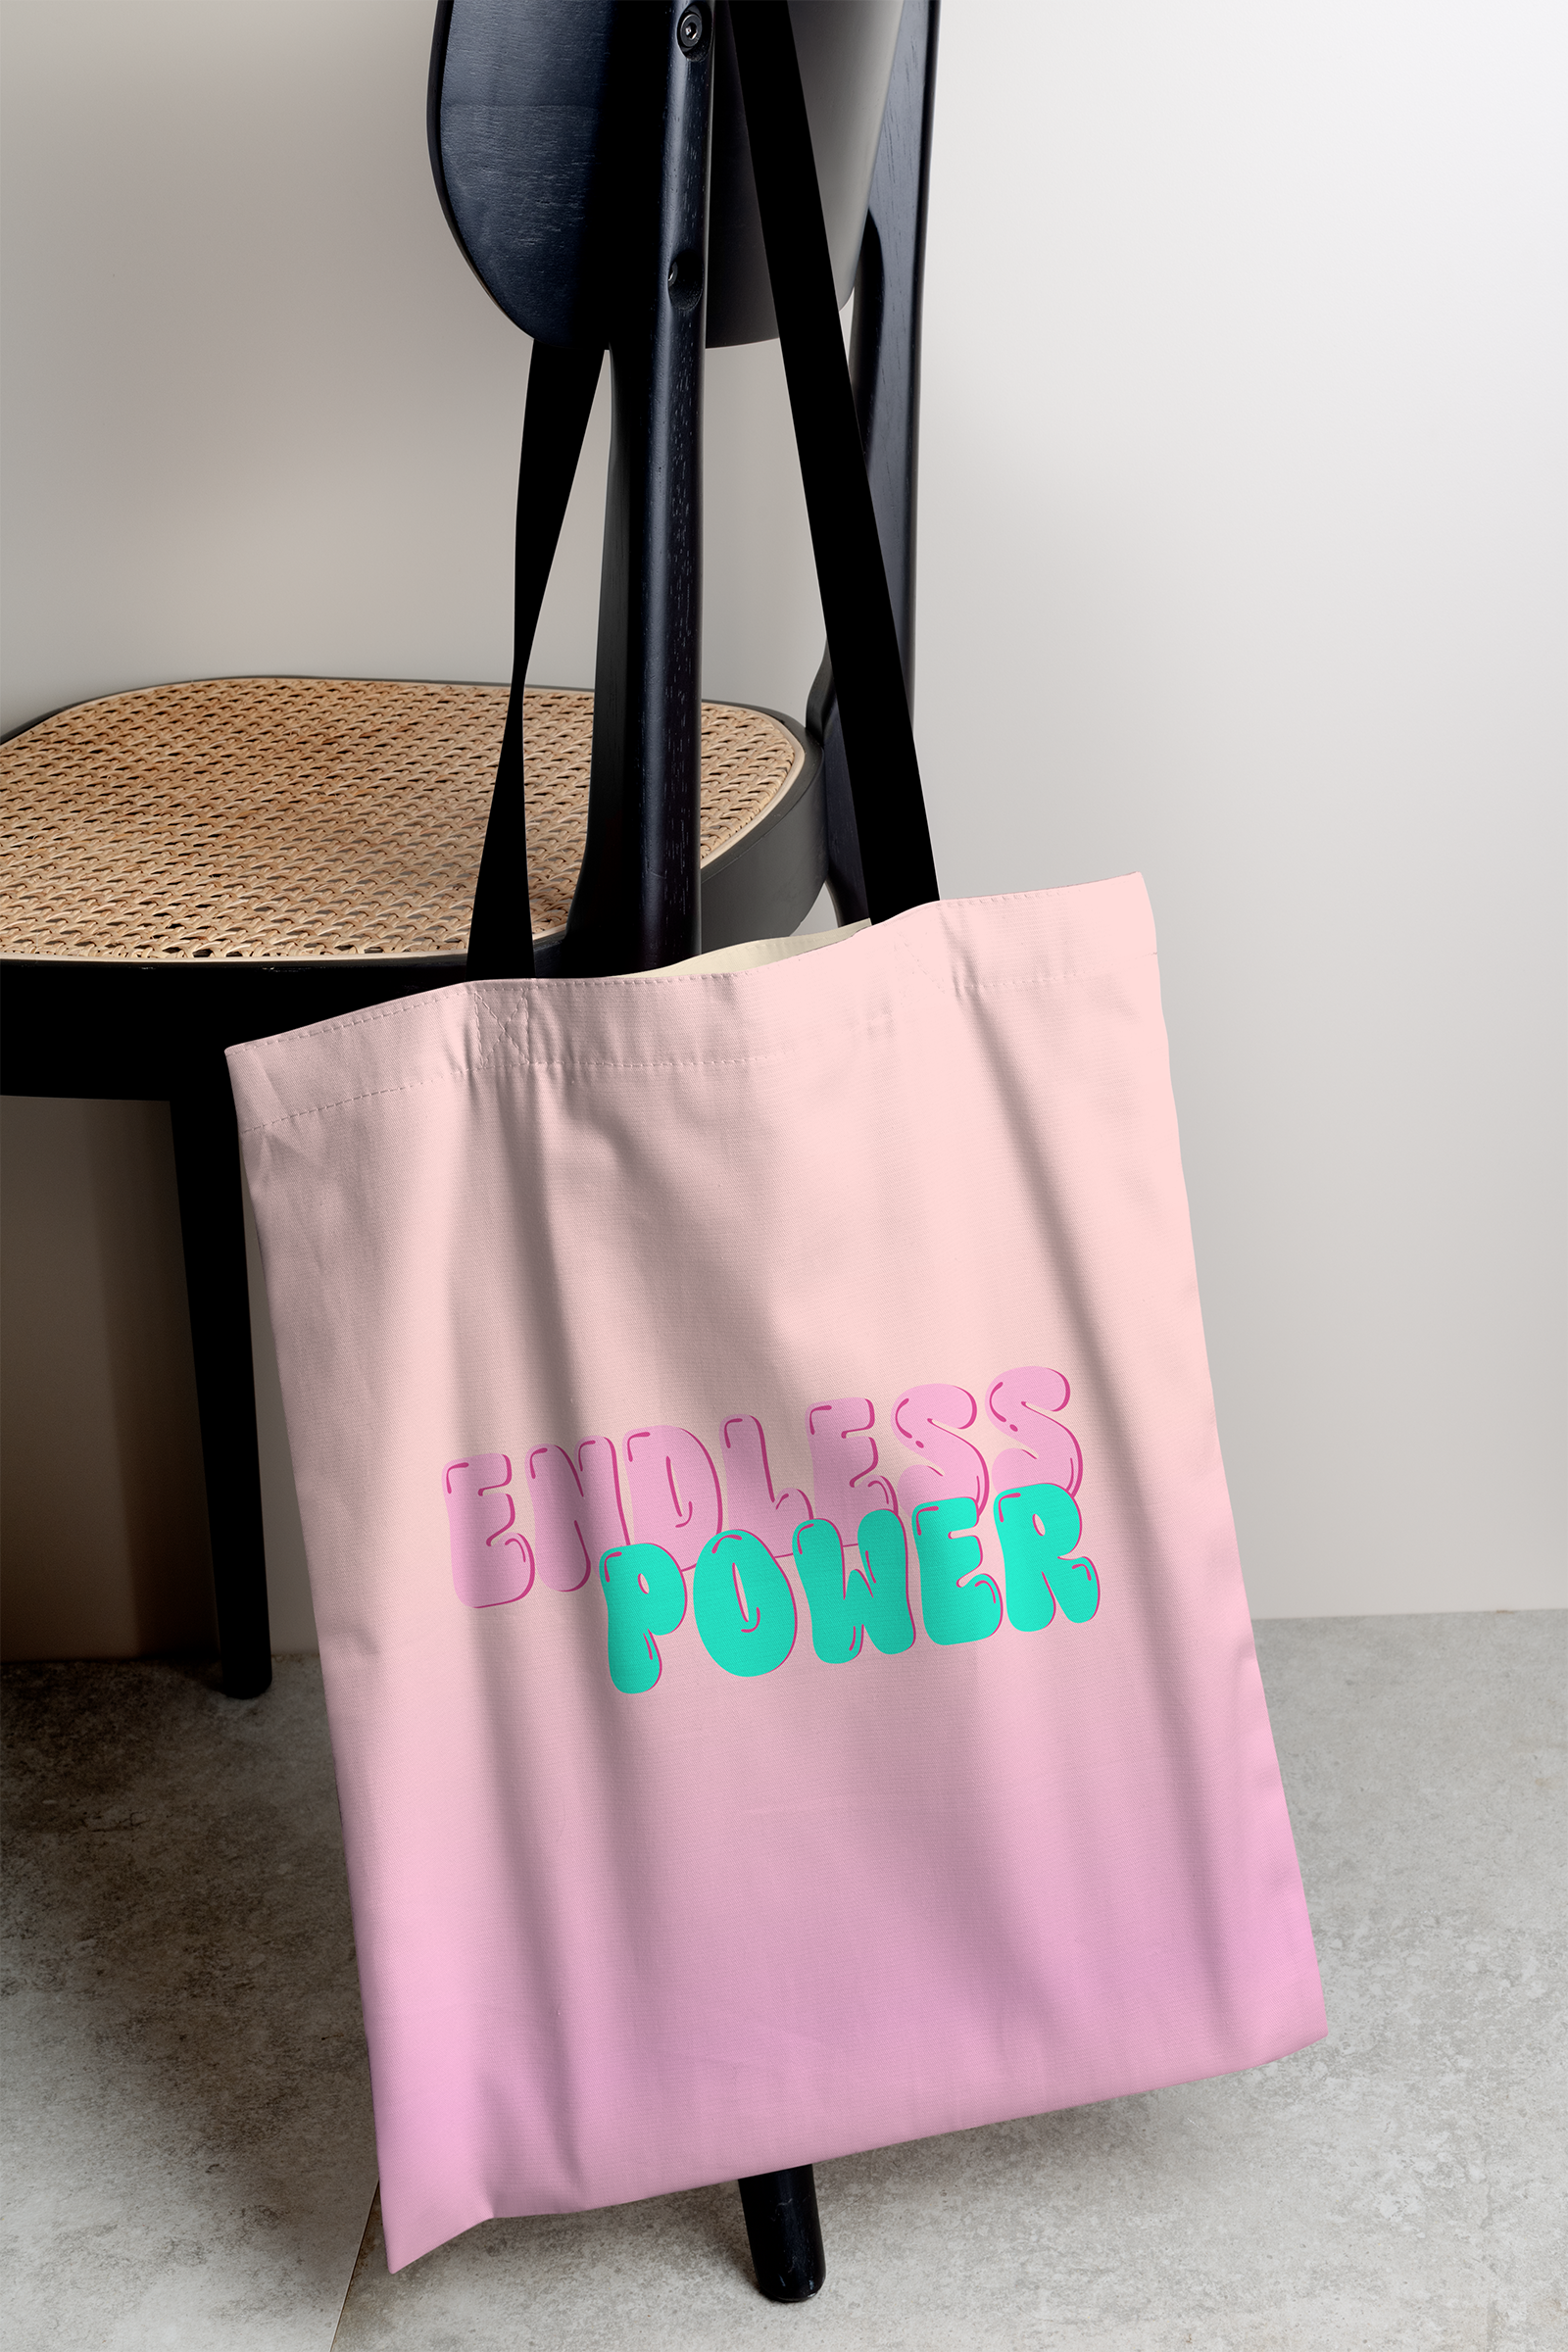 Endless Power Tote Bag